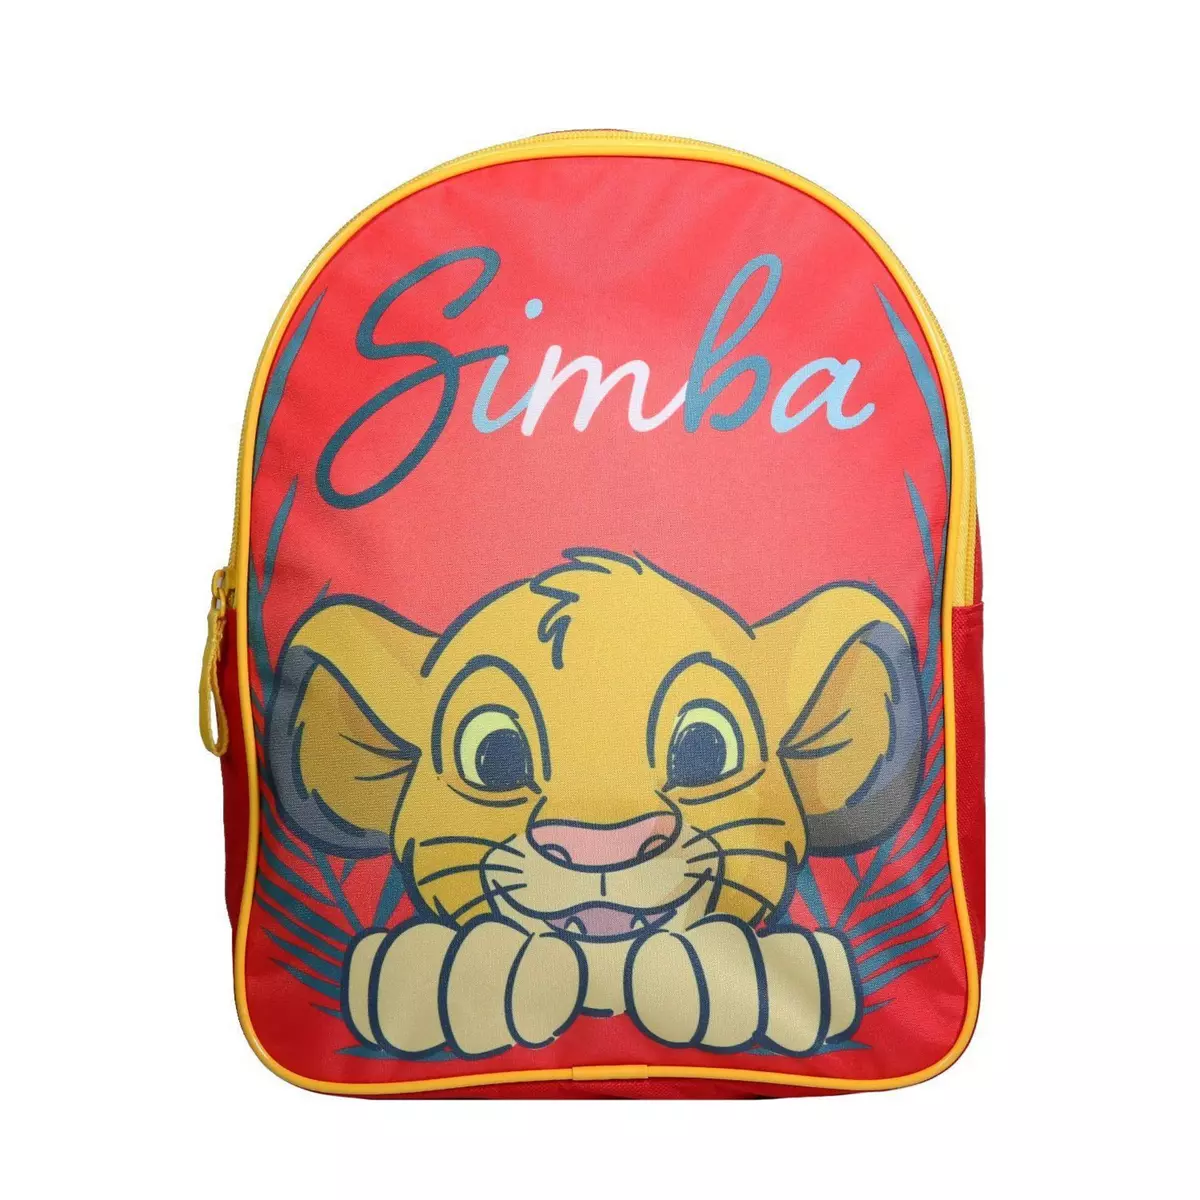 Bagtrotter BAGTROTTER Sac à dos gouter maternelle 31 cm Disney Le Roi Lion Simba Rouge